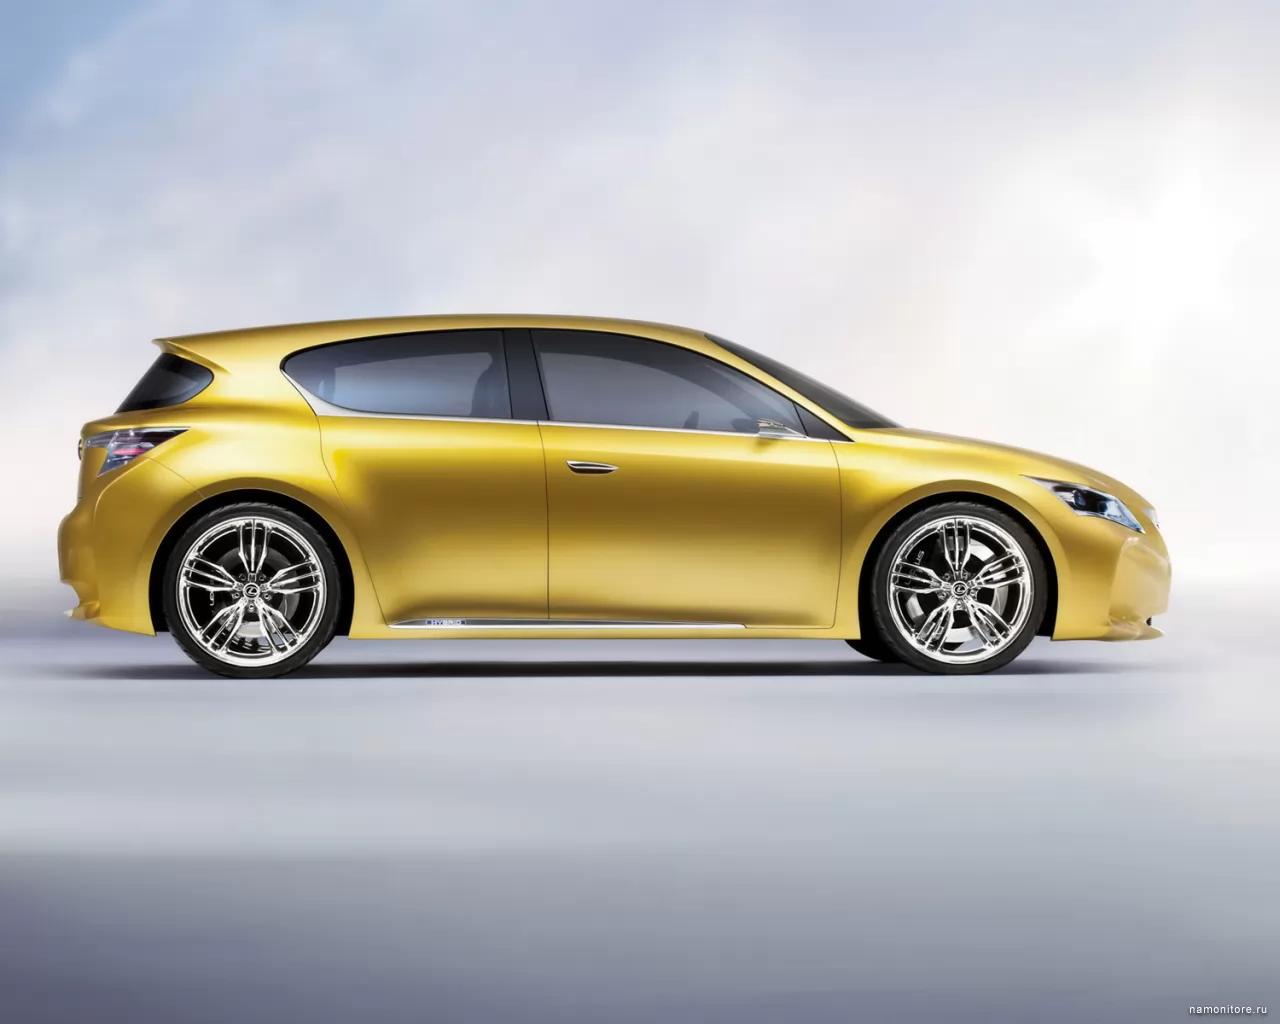 Lexus LF-Ch Compact Hybrid Concept, Lexus, автомобили, жёлтое, золотистое, концепт, техника х